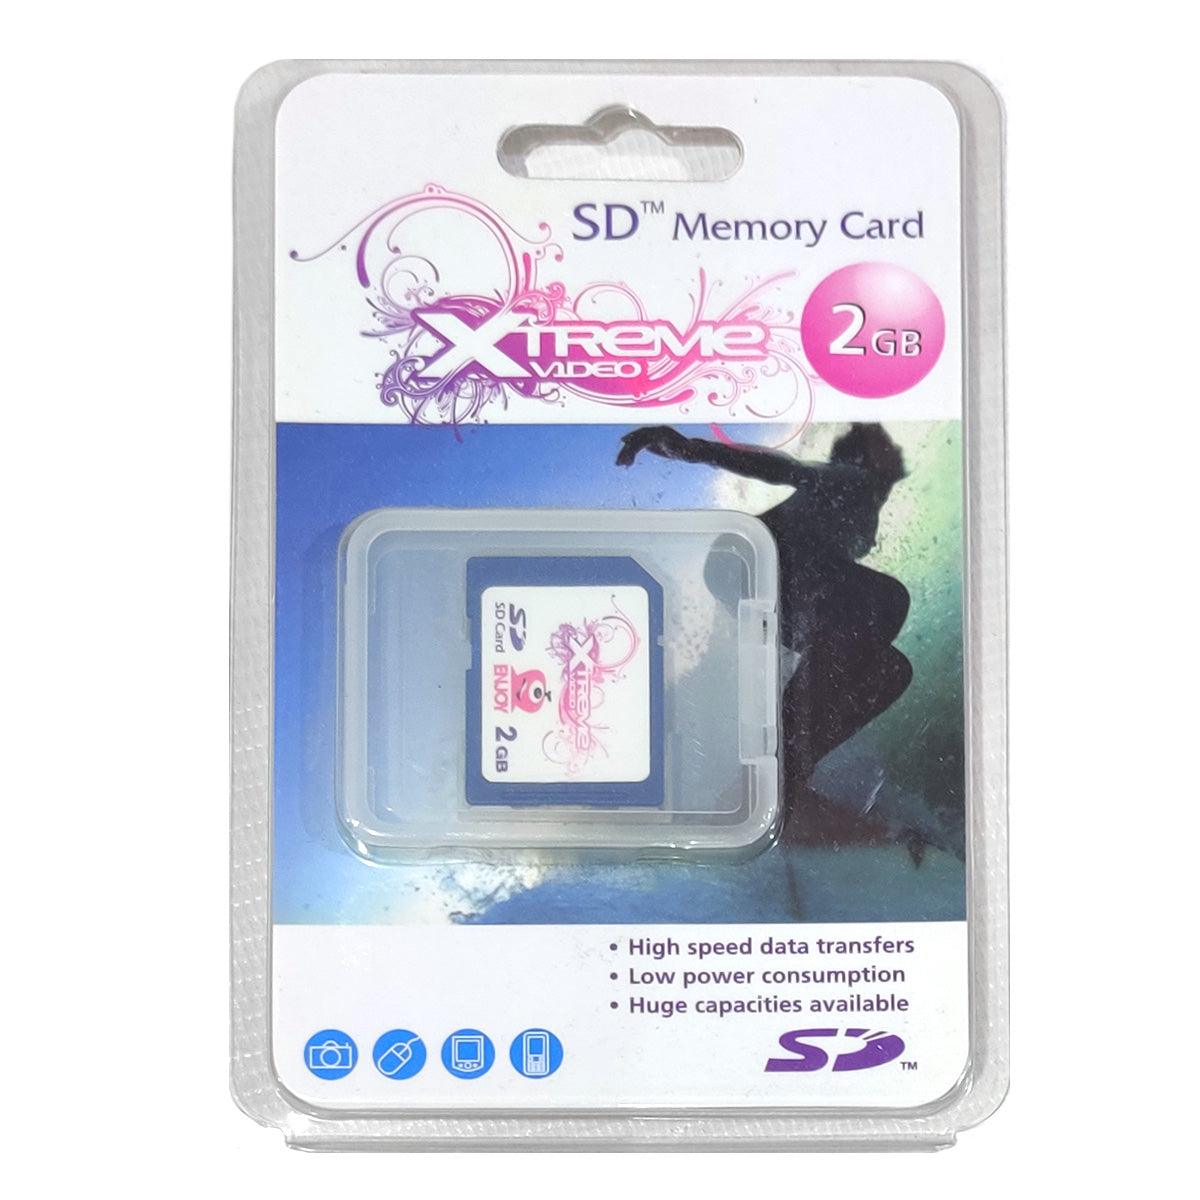 GoPro Xtreme Video SD Card - Kiteshop.com